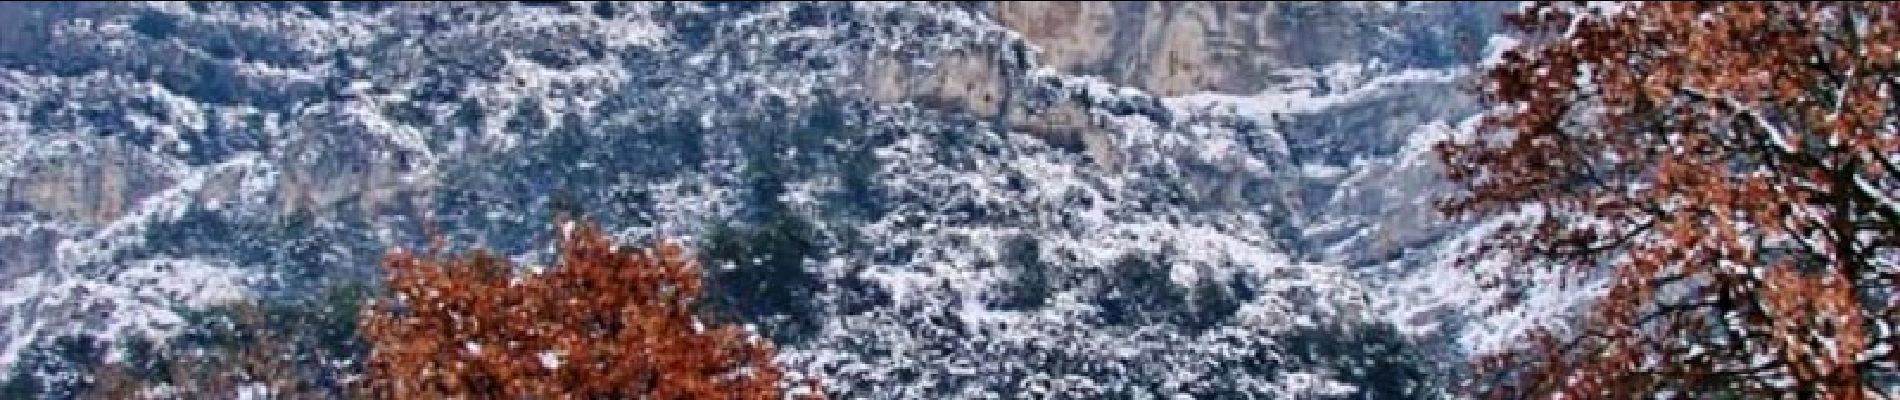 Excursión Senderismo Taillades - Les Taillades-De la source du Boulon au Castelas - Gorge de Badarel sous la neige - Photo